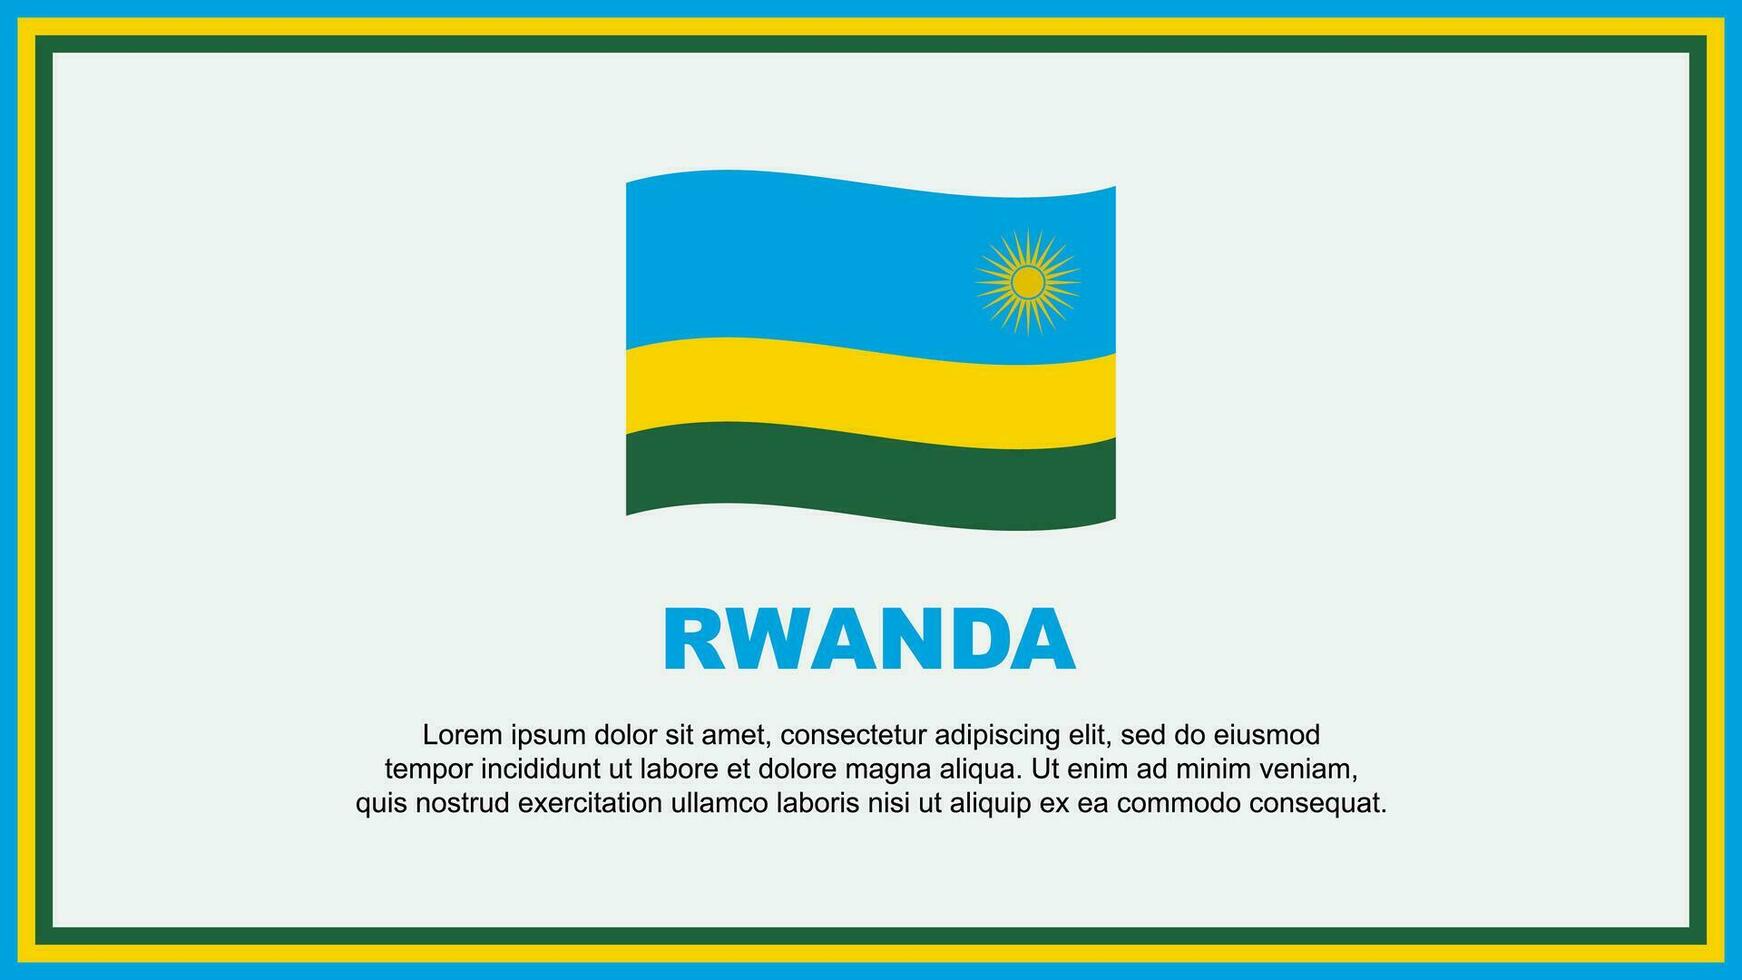 Ruanda Flagge abstrakt Hintergrund Design Vorlage. Ruanda Unabhängigkeit Tag Banner Sozial Medien Vektor Illustration. Ruanda Banner